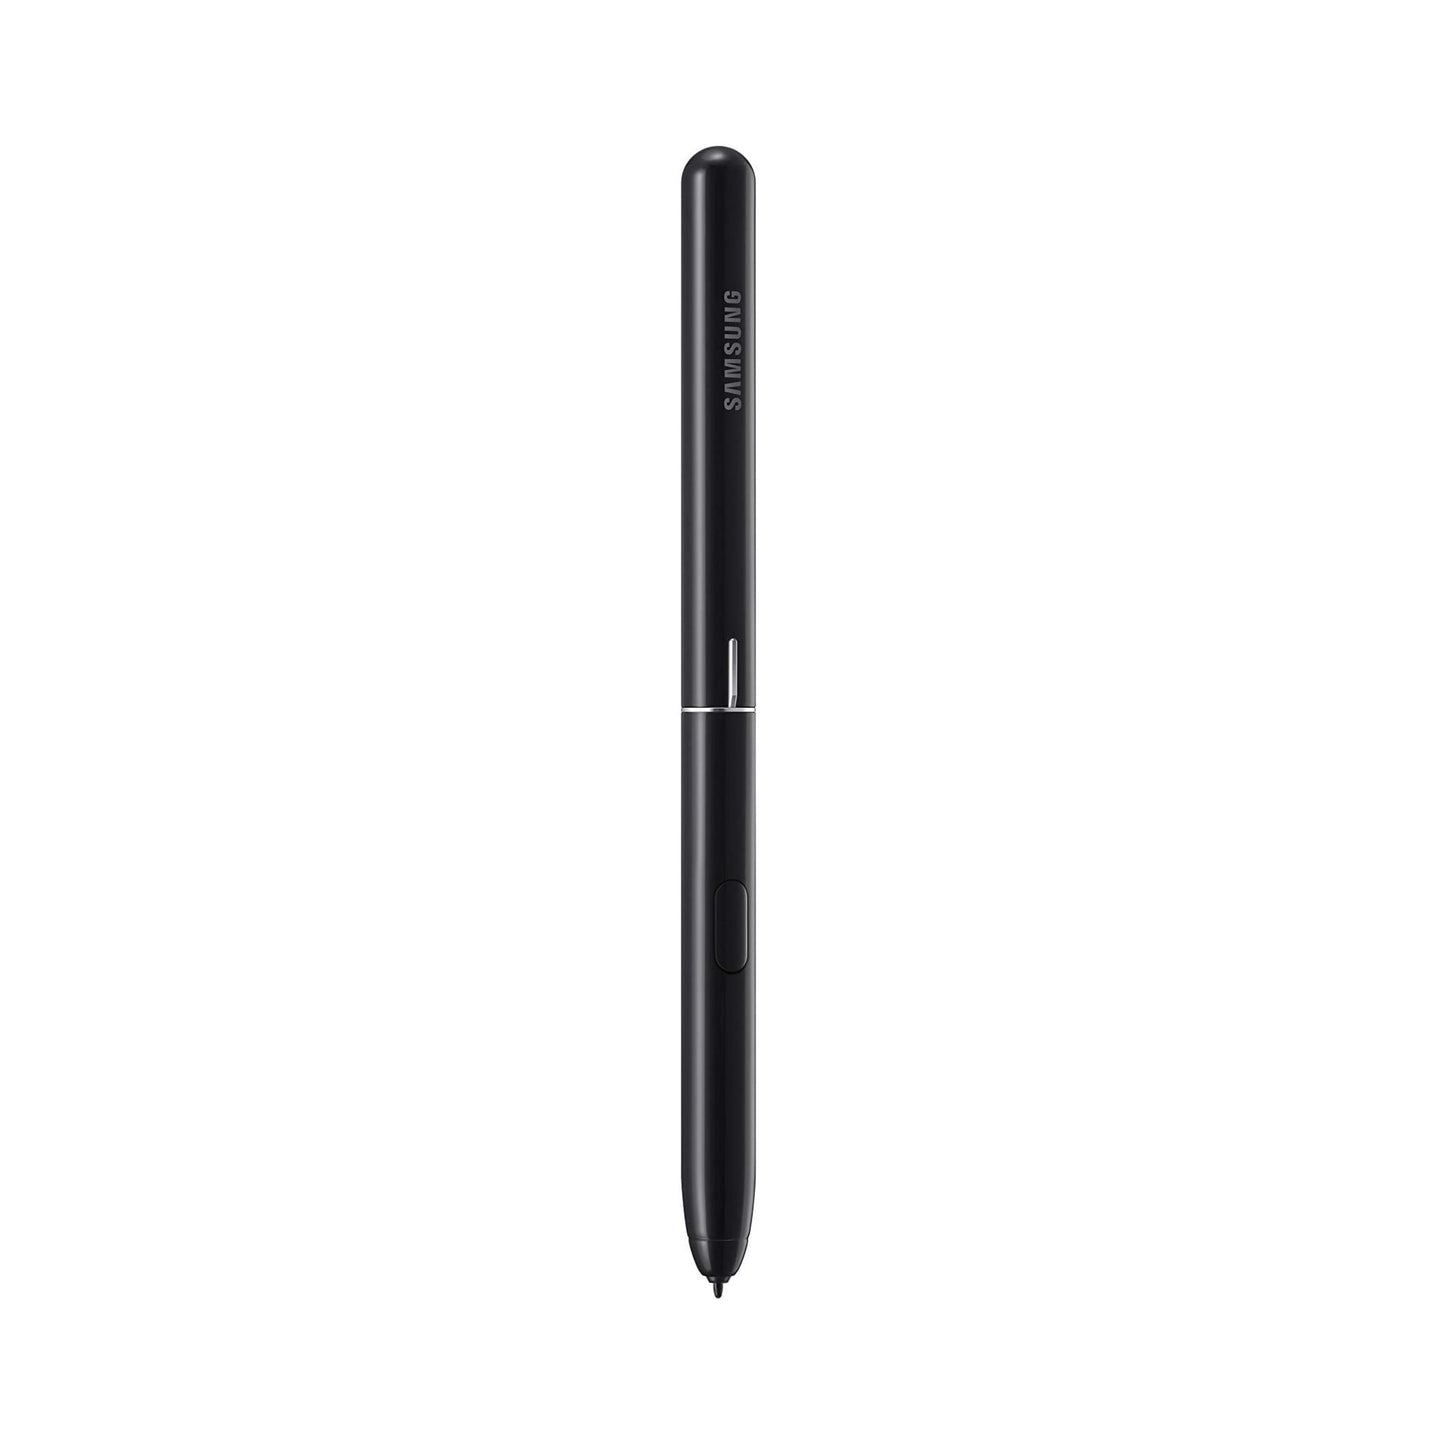 SAMSUNG Galaxy Tab S4 10.5 2018 SM-T835 64GB 4GLTE (Black)